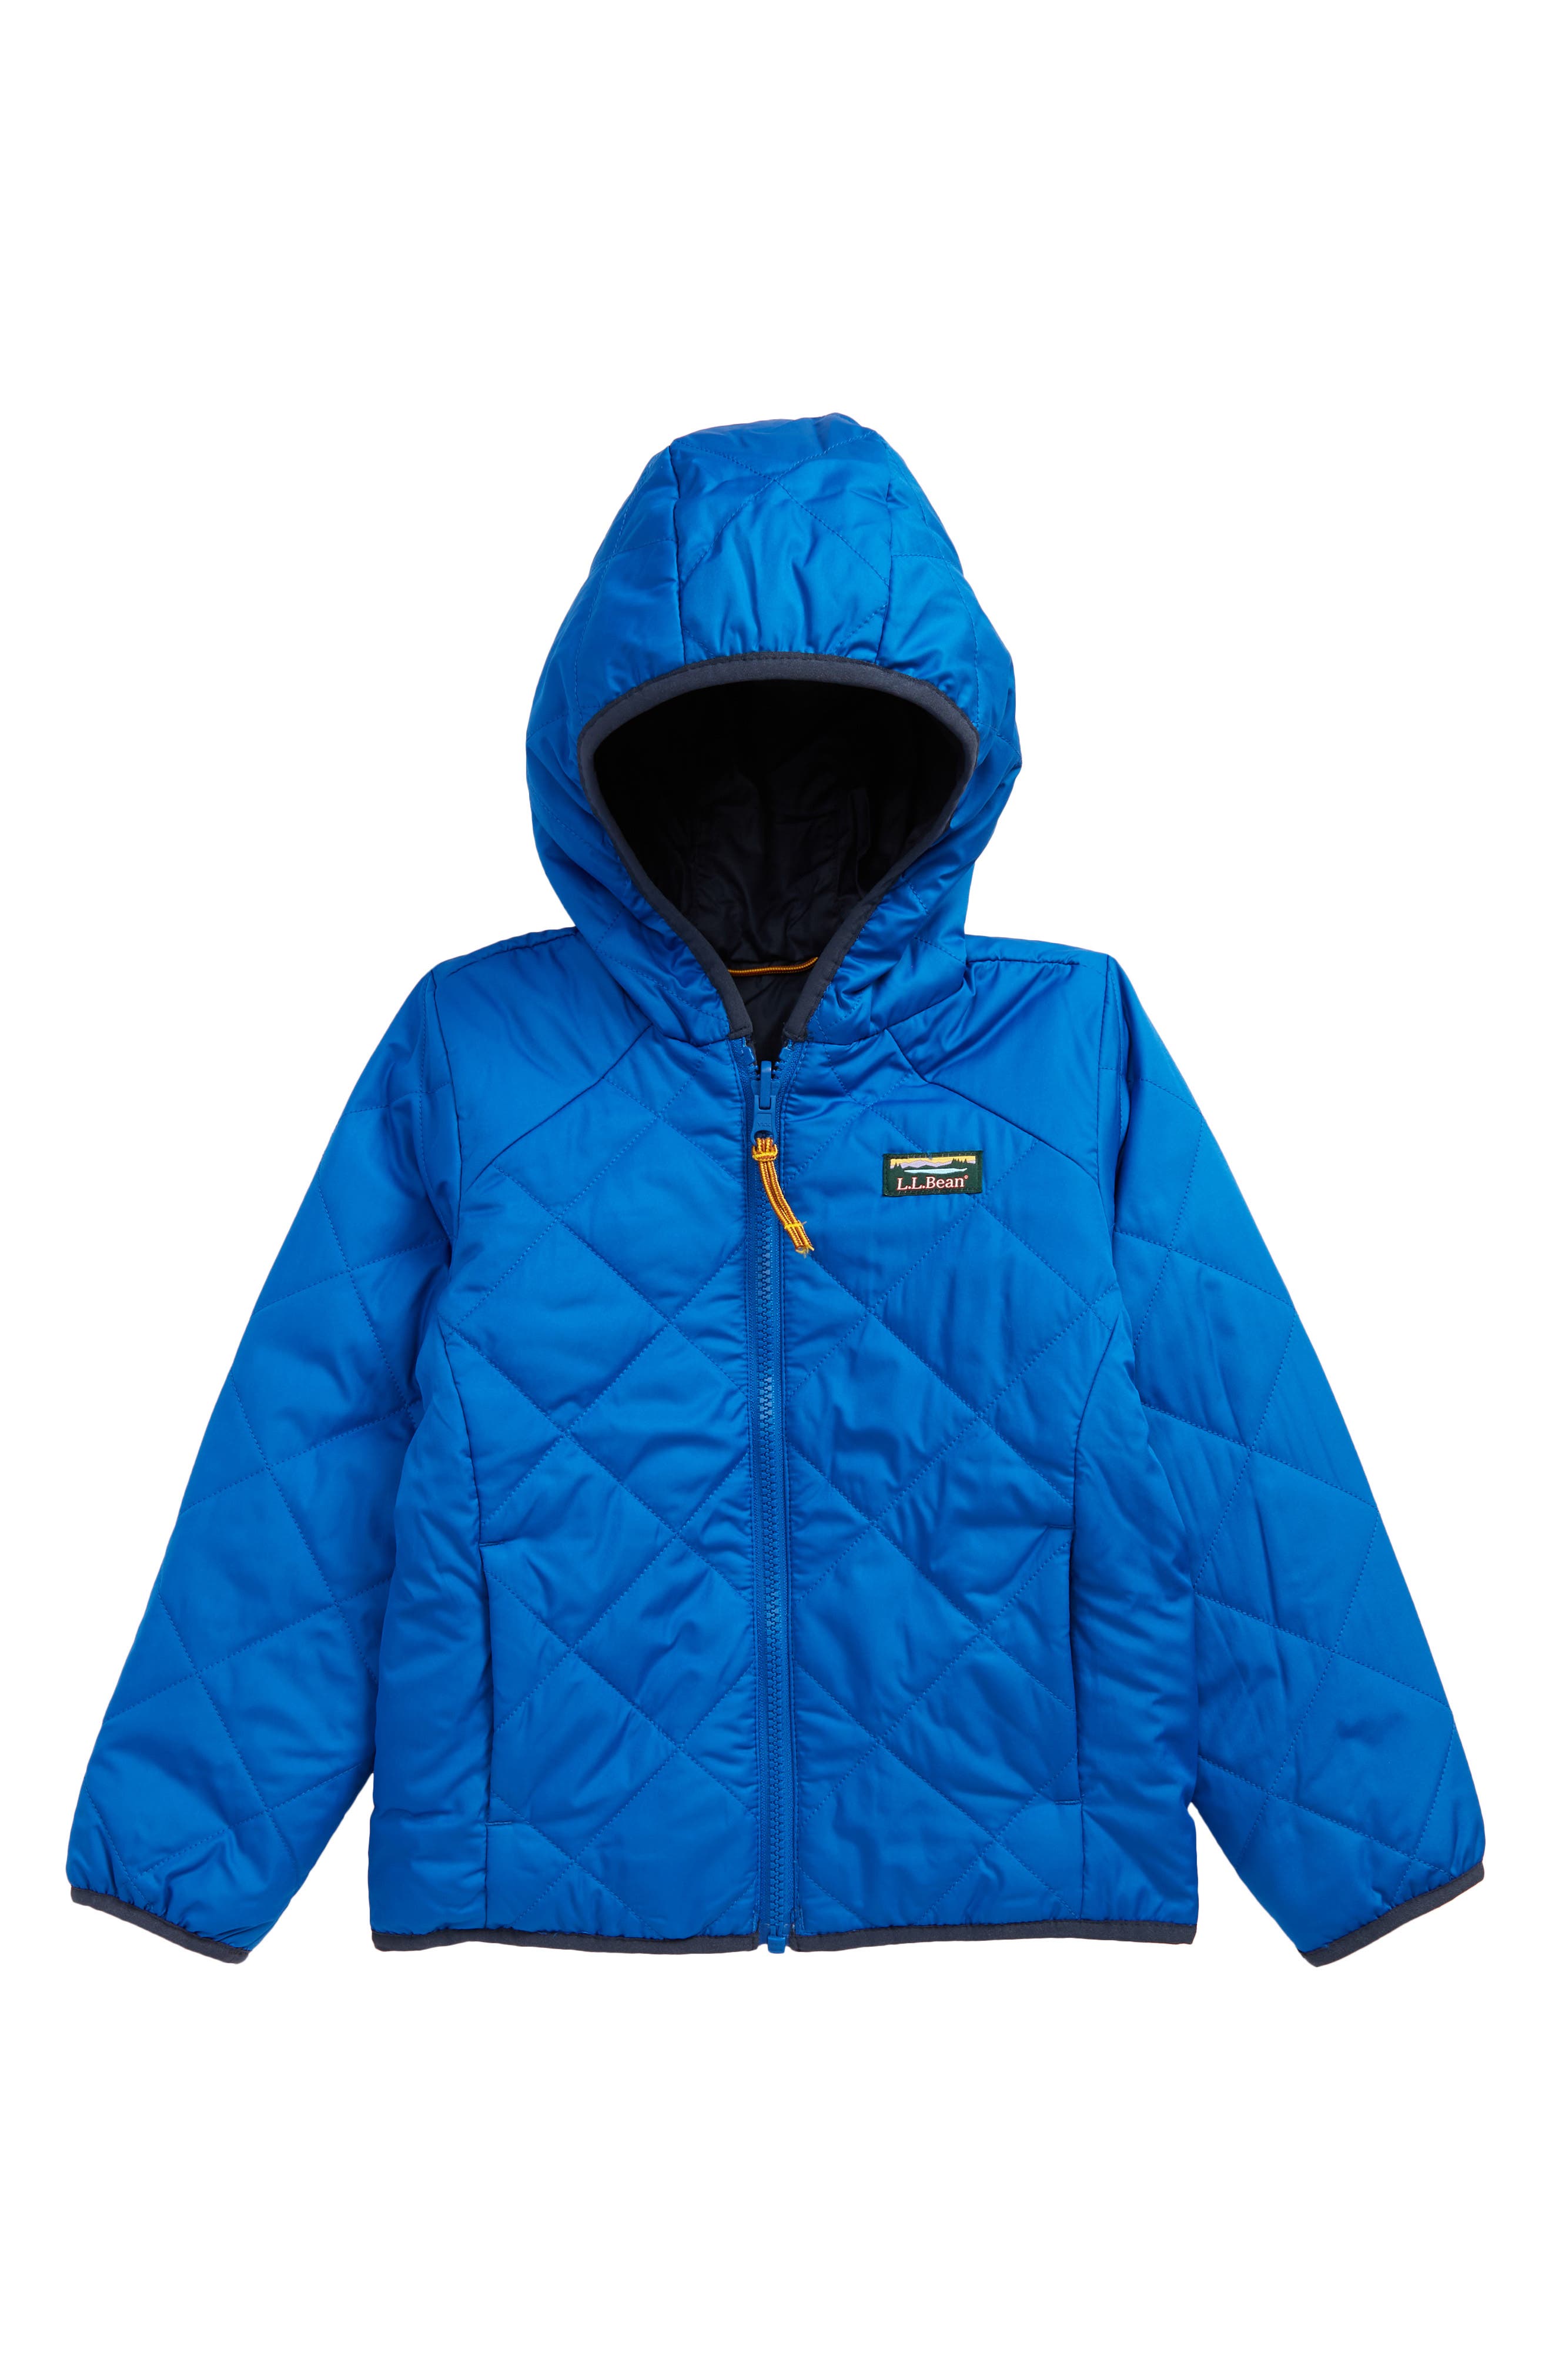 Kids Boys Denim Dark Blue Jacket Fleece Sleeves & Hooded Fashion Jackets Coat